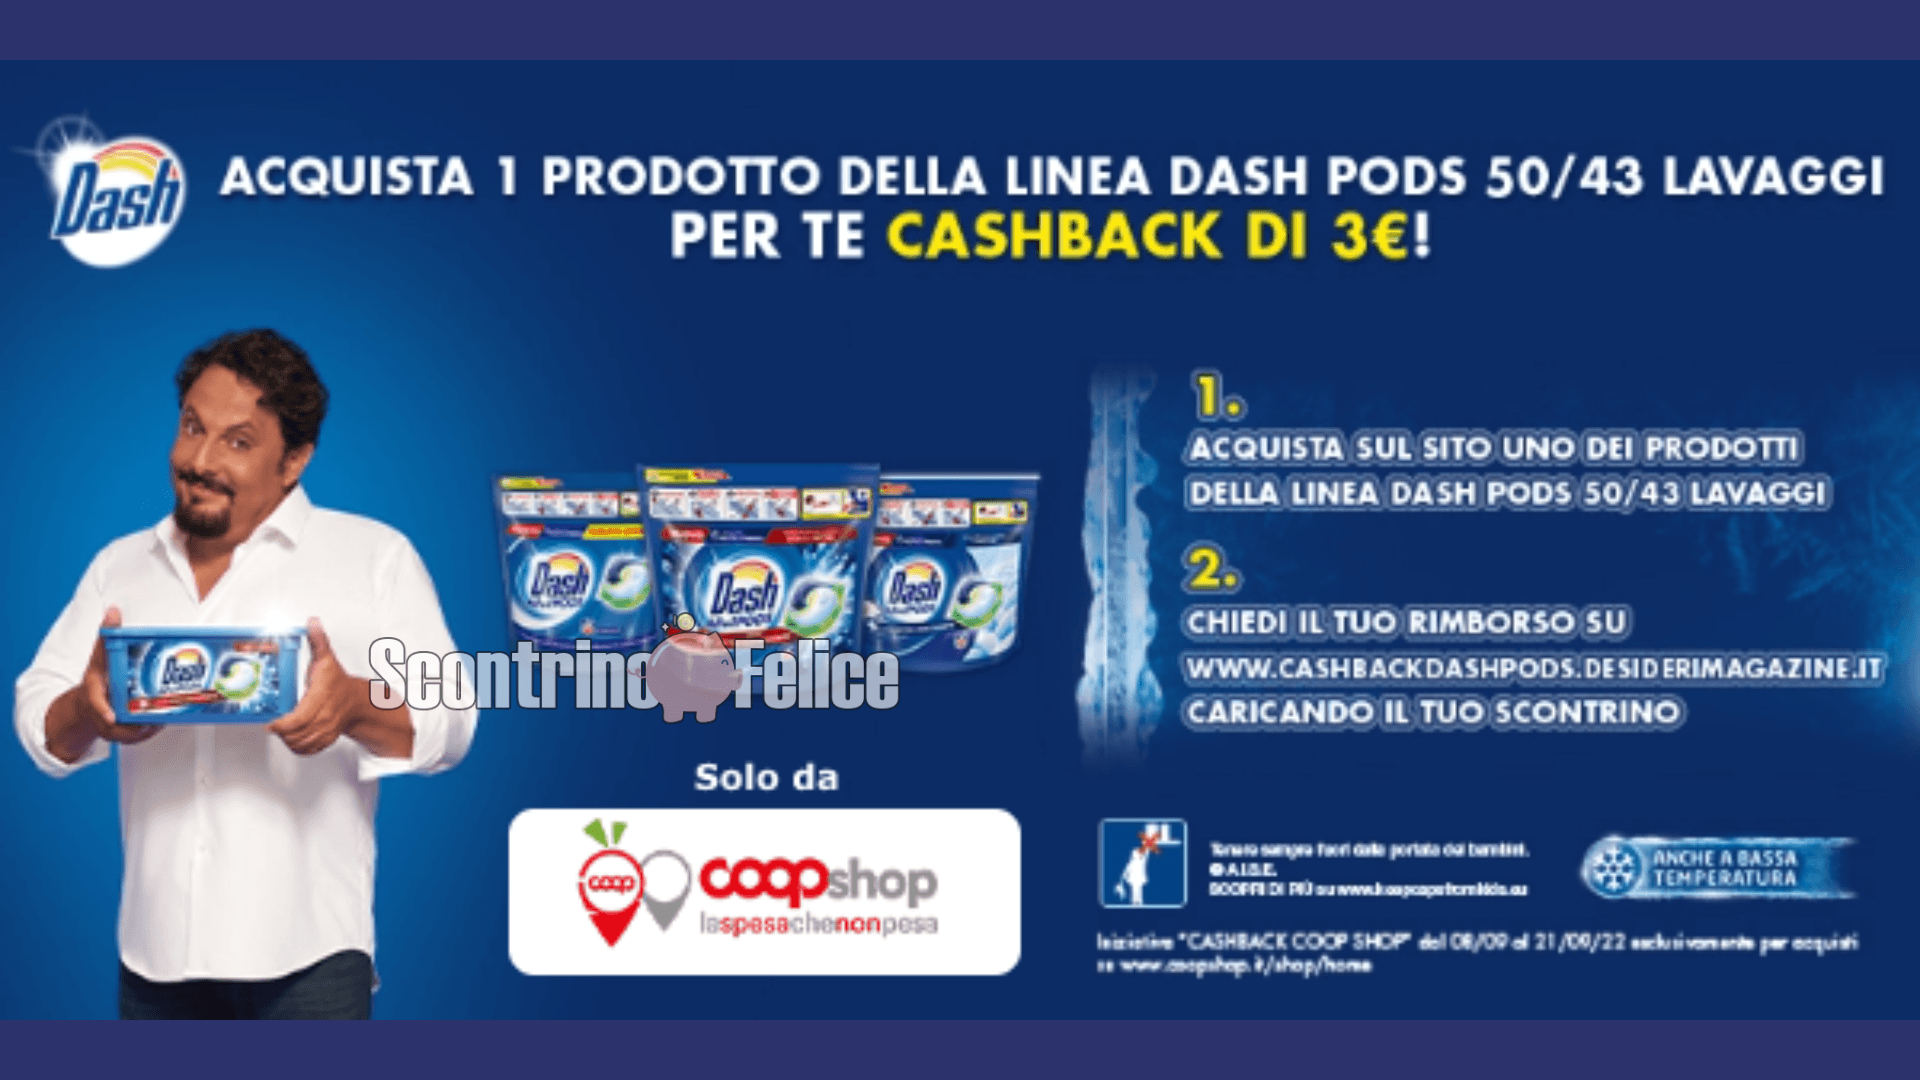 Cashback Dash Pods online su Coop Shop: ricevi un rimborso di 3 euro 1